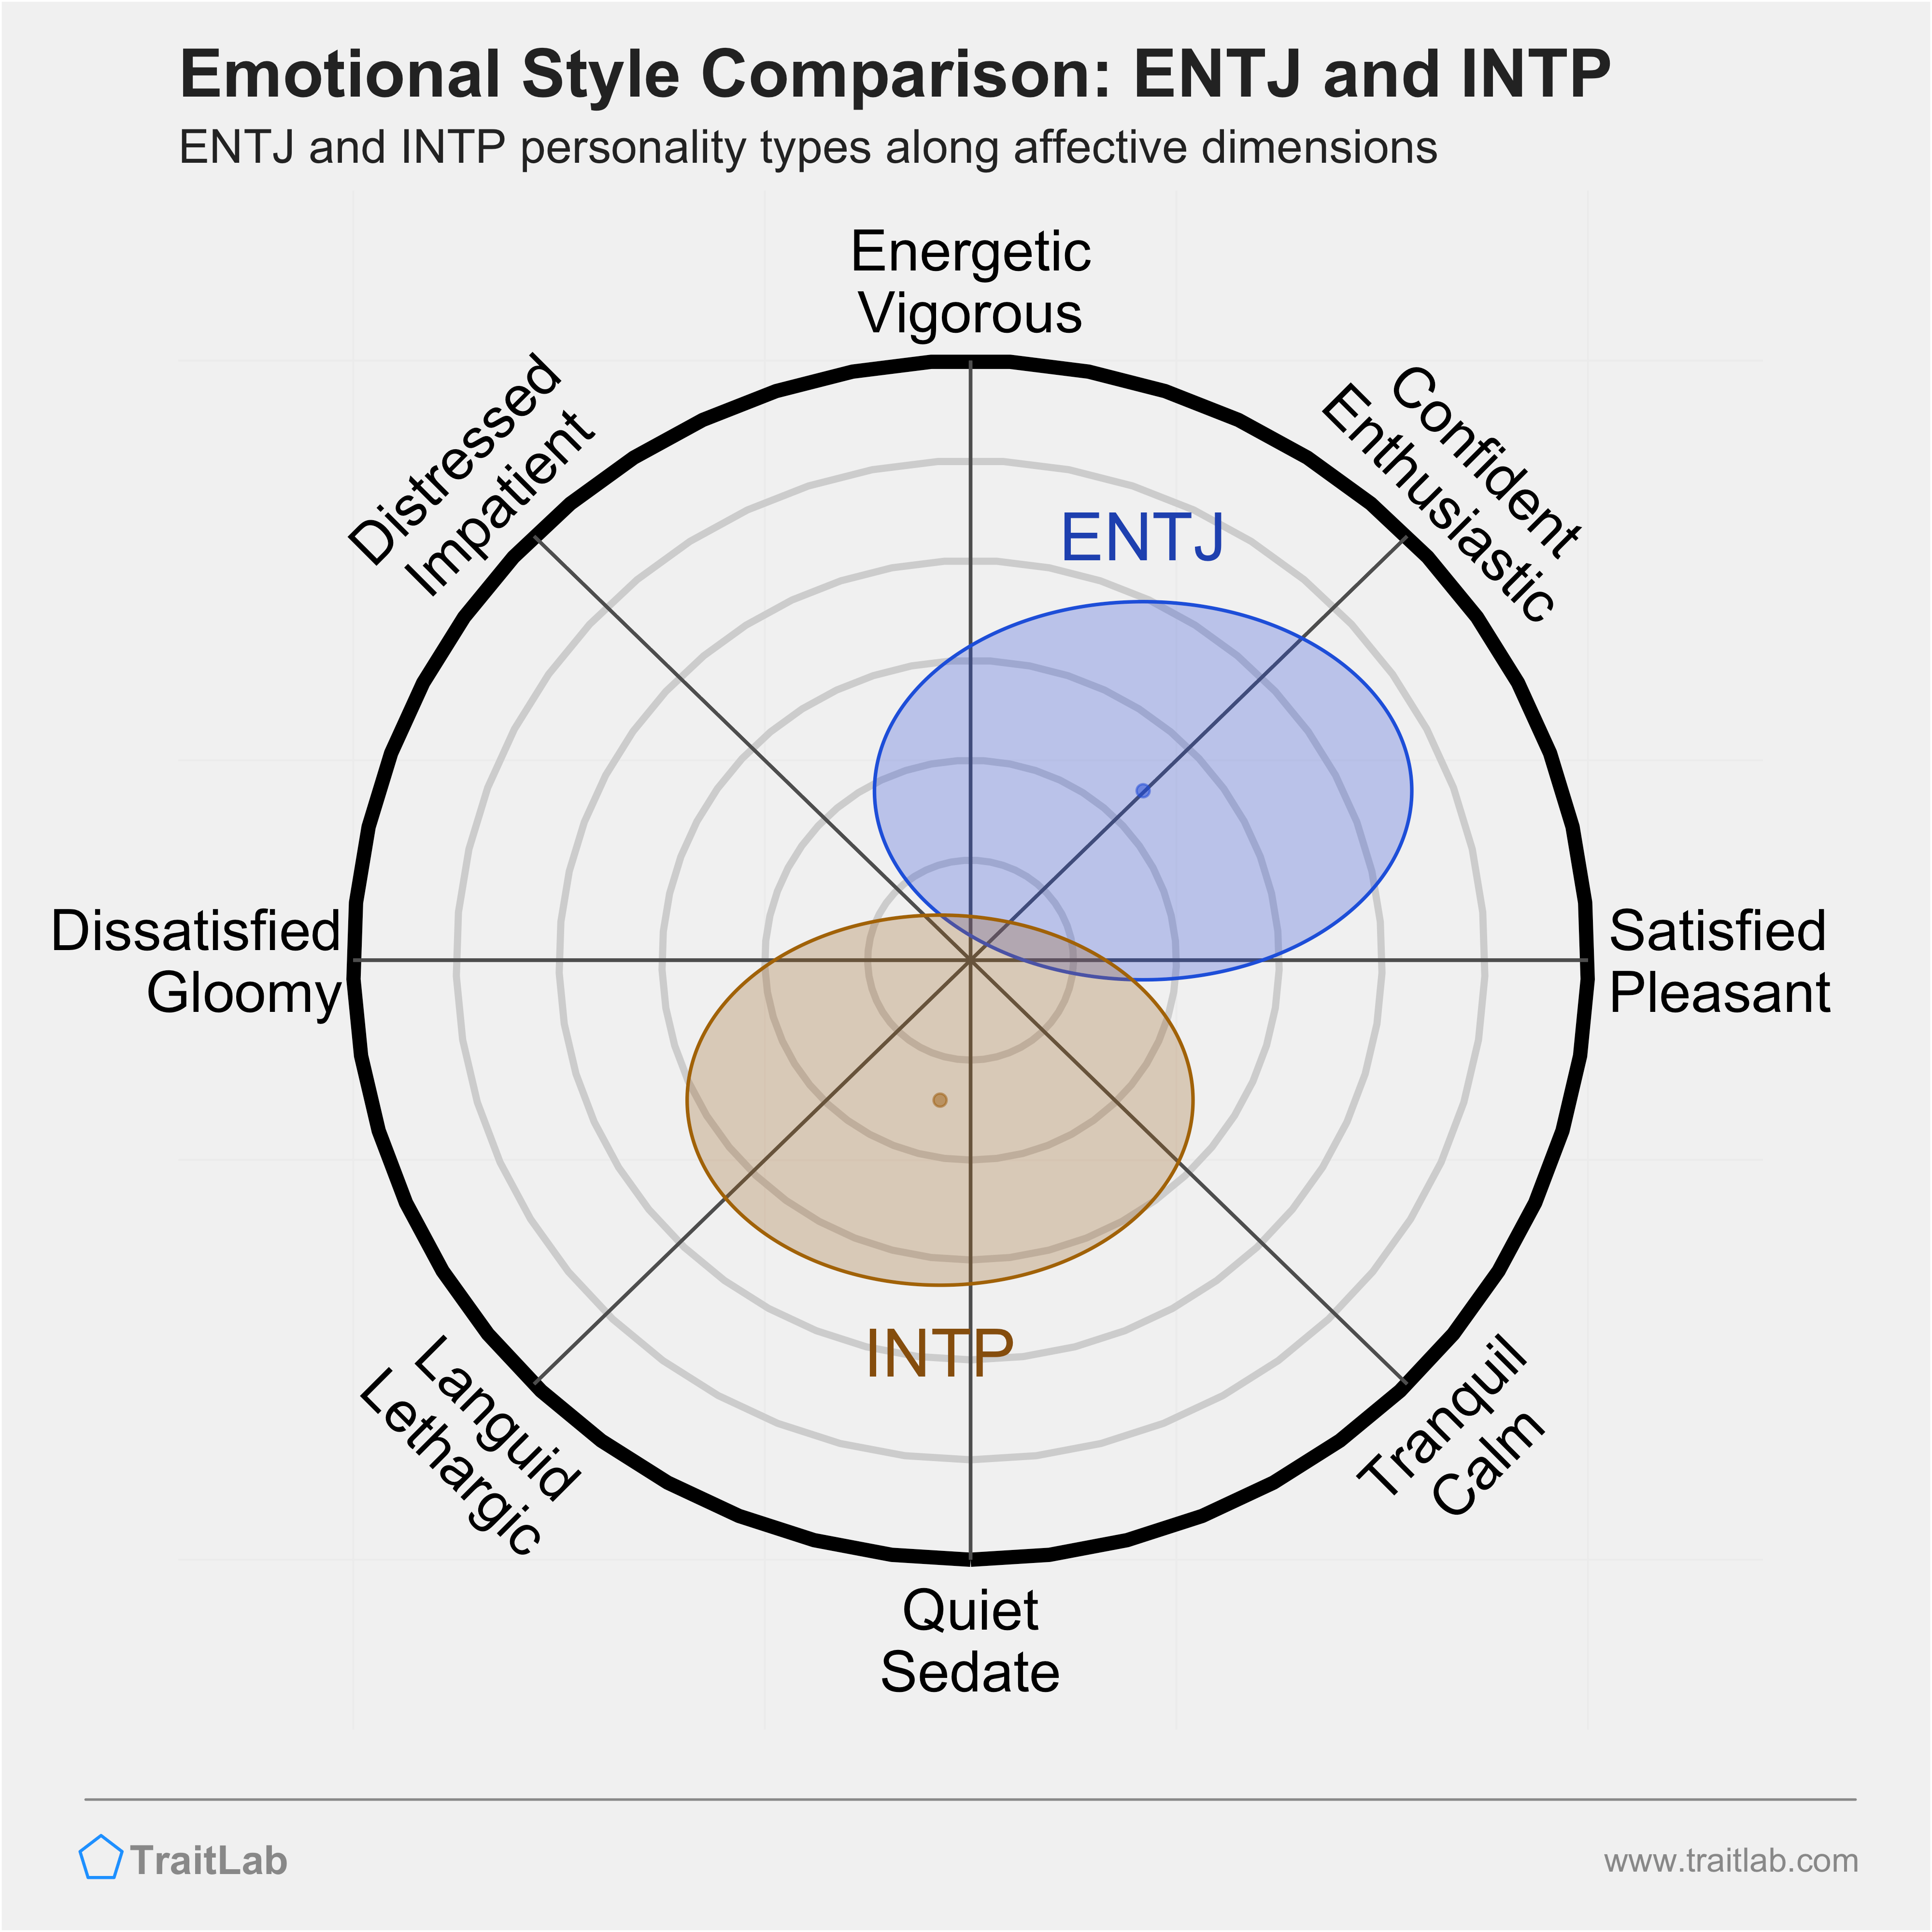 ENTJ and INTP comparison across emotional (affective) dimensions